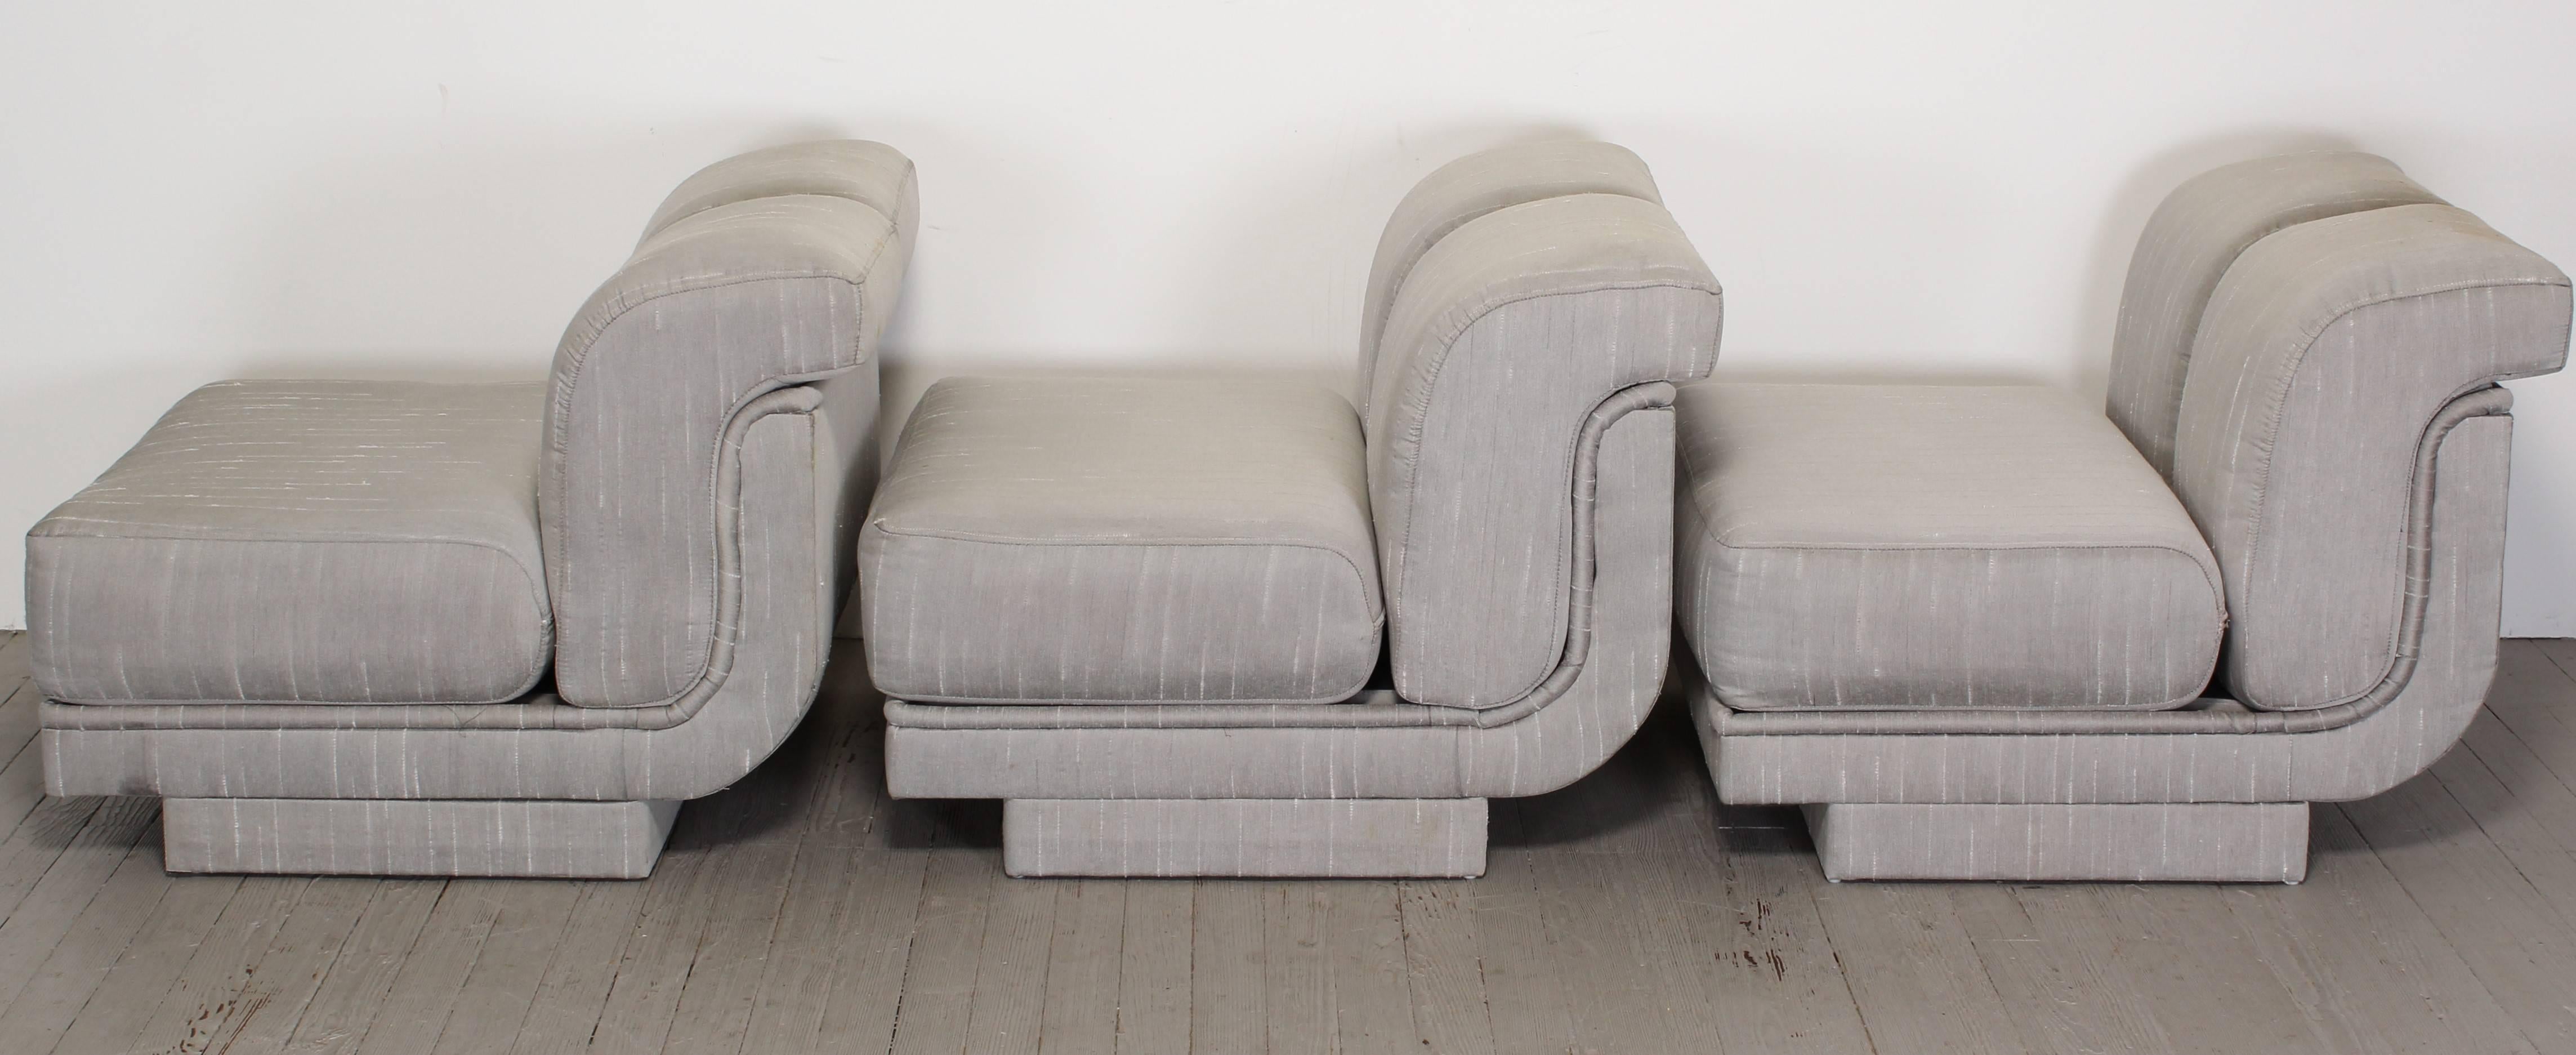 maurice villency sectional sofa